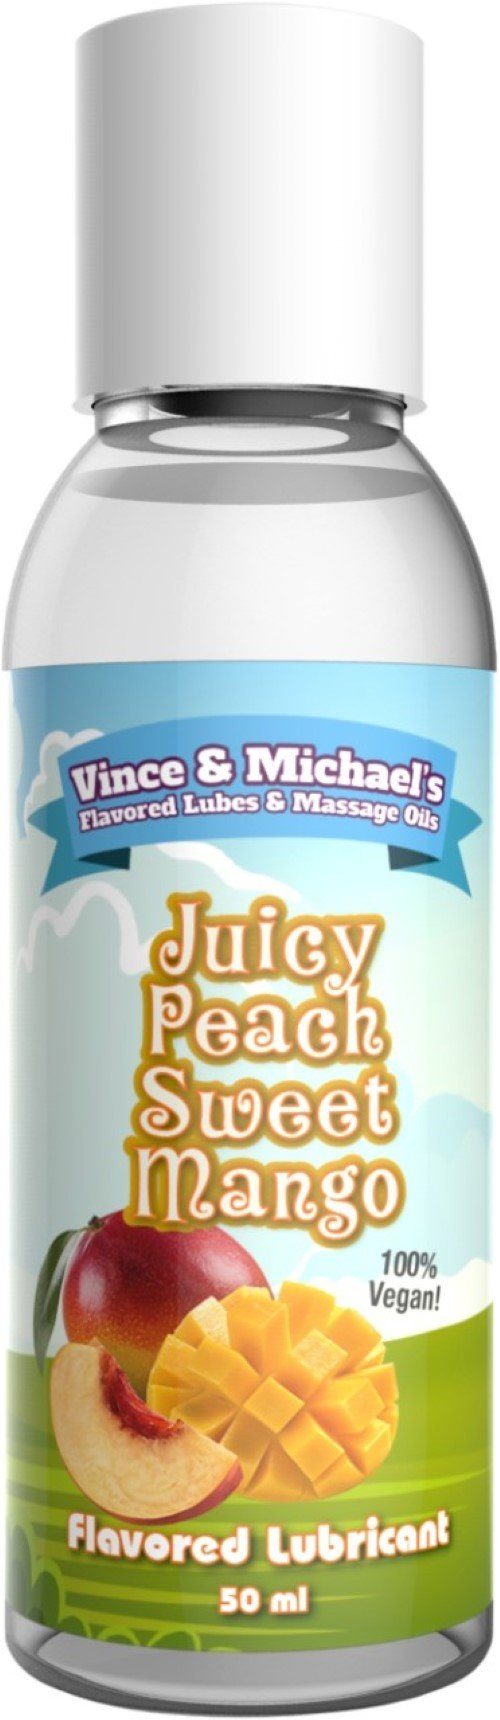 & 50 Vince ml & Sweet Peach Gleitgel VINCE 50ml - Mango MICHAEL's Michael´s Juicy